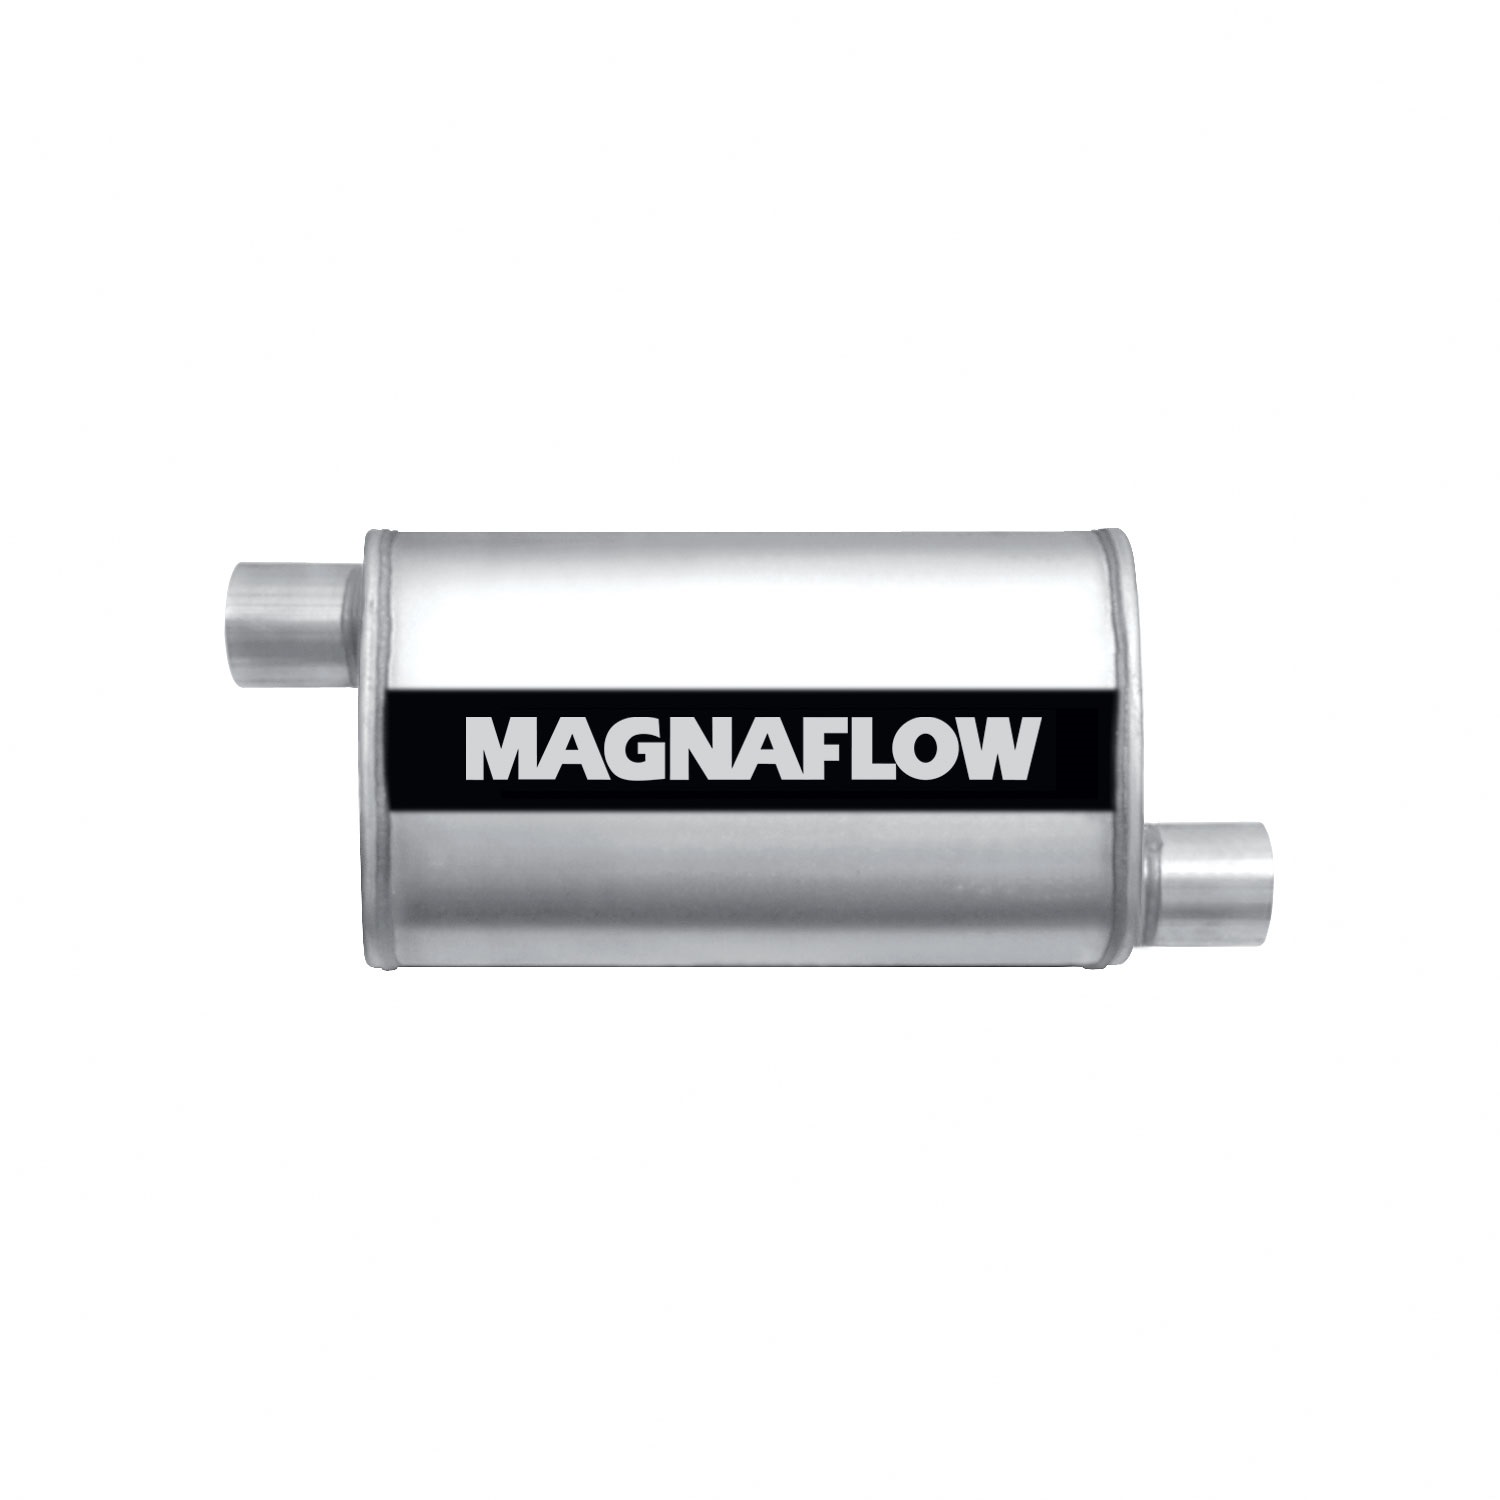 Magnaflow Performance Exhaust Magnaflow Performance Exhaust 11235 Stainless Steel Muffler